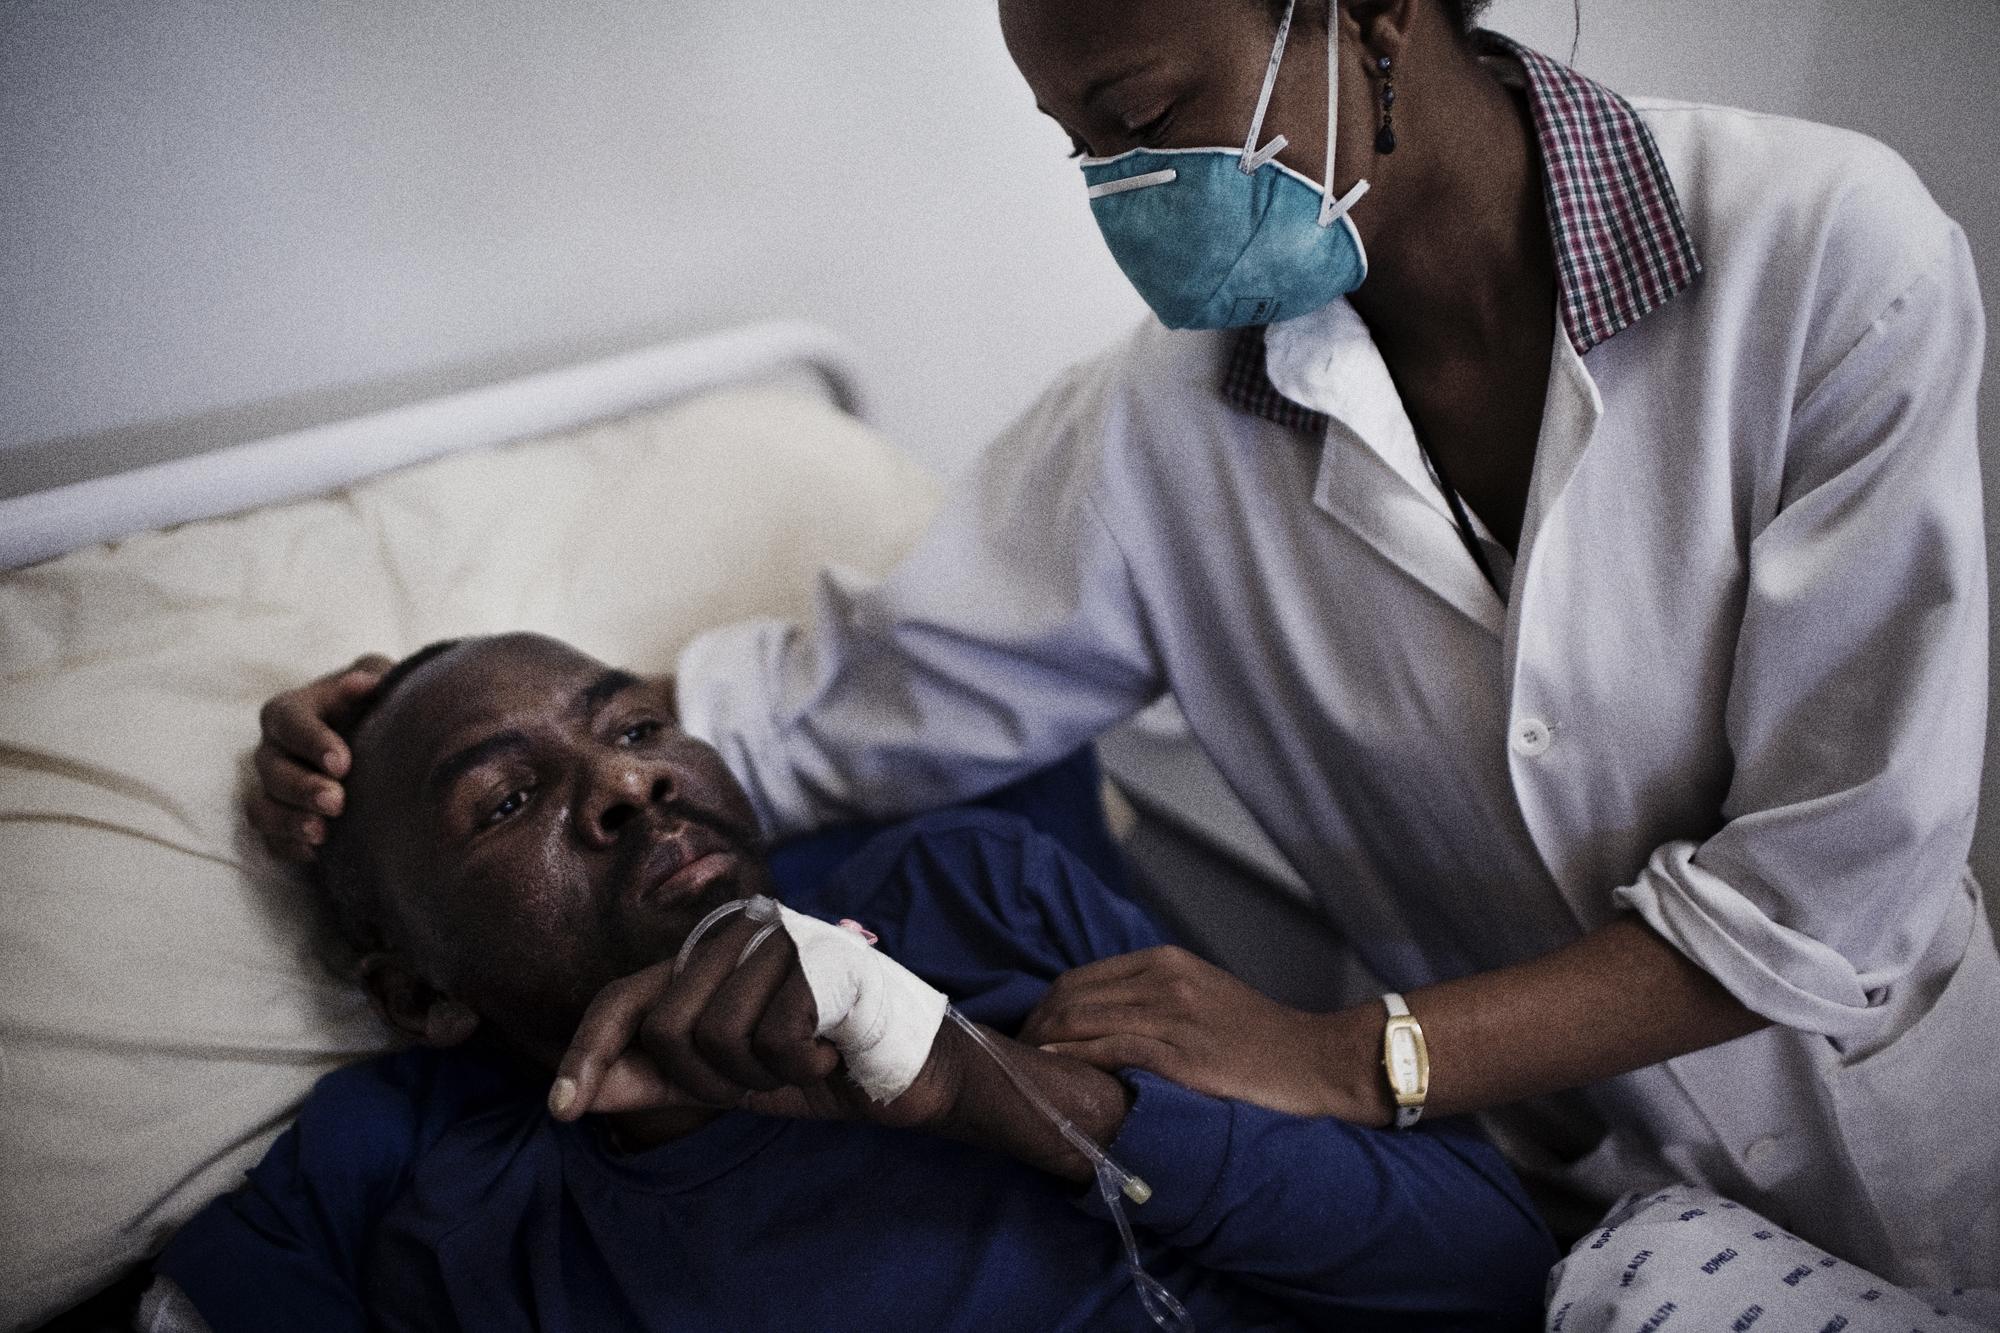 Tuberculosis / Lesotho - Lesotho.
Moeketsi Rathulo has multi-drug resistant...